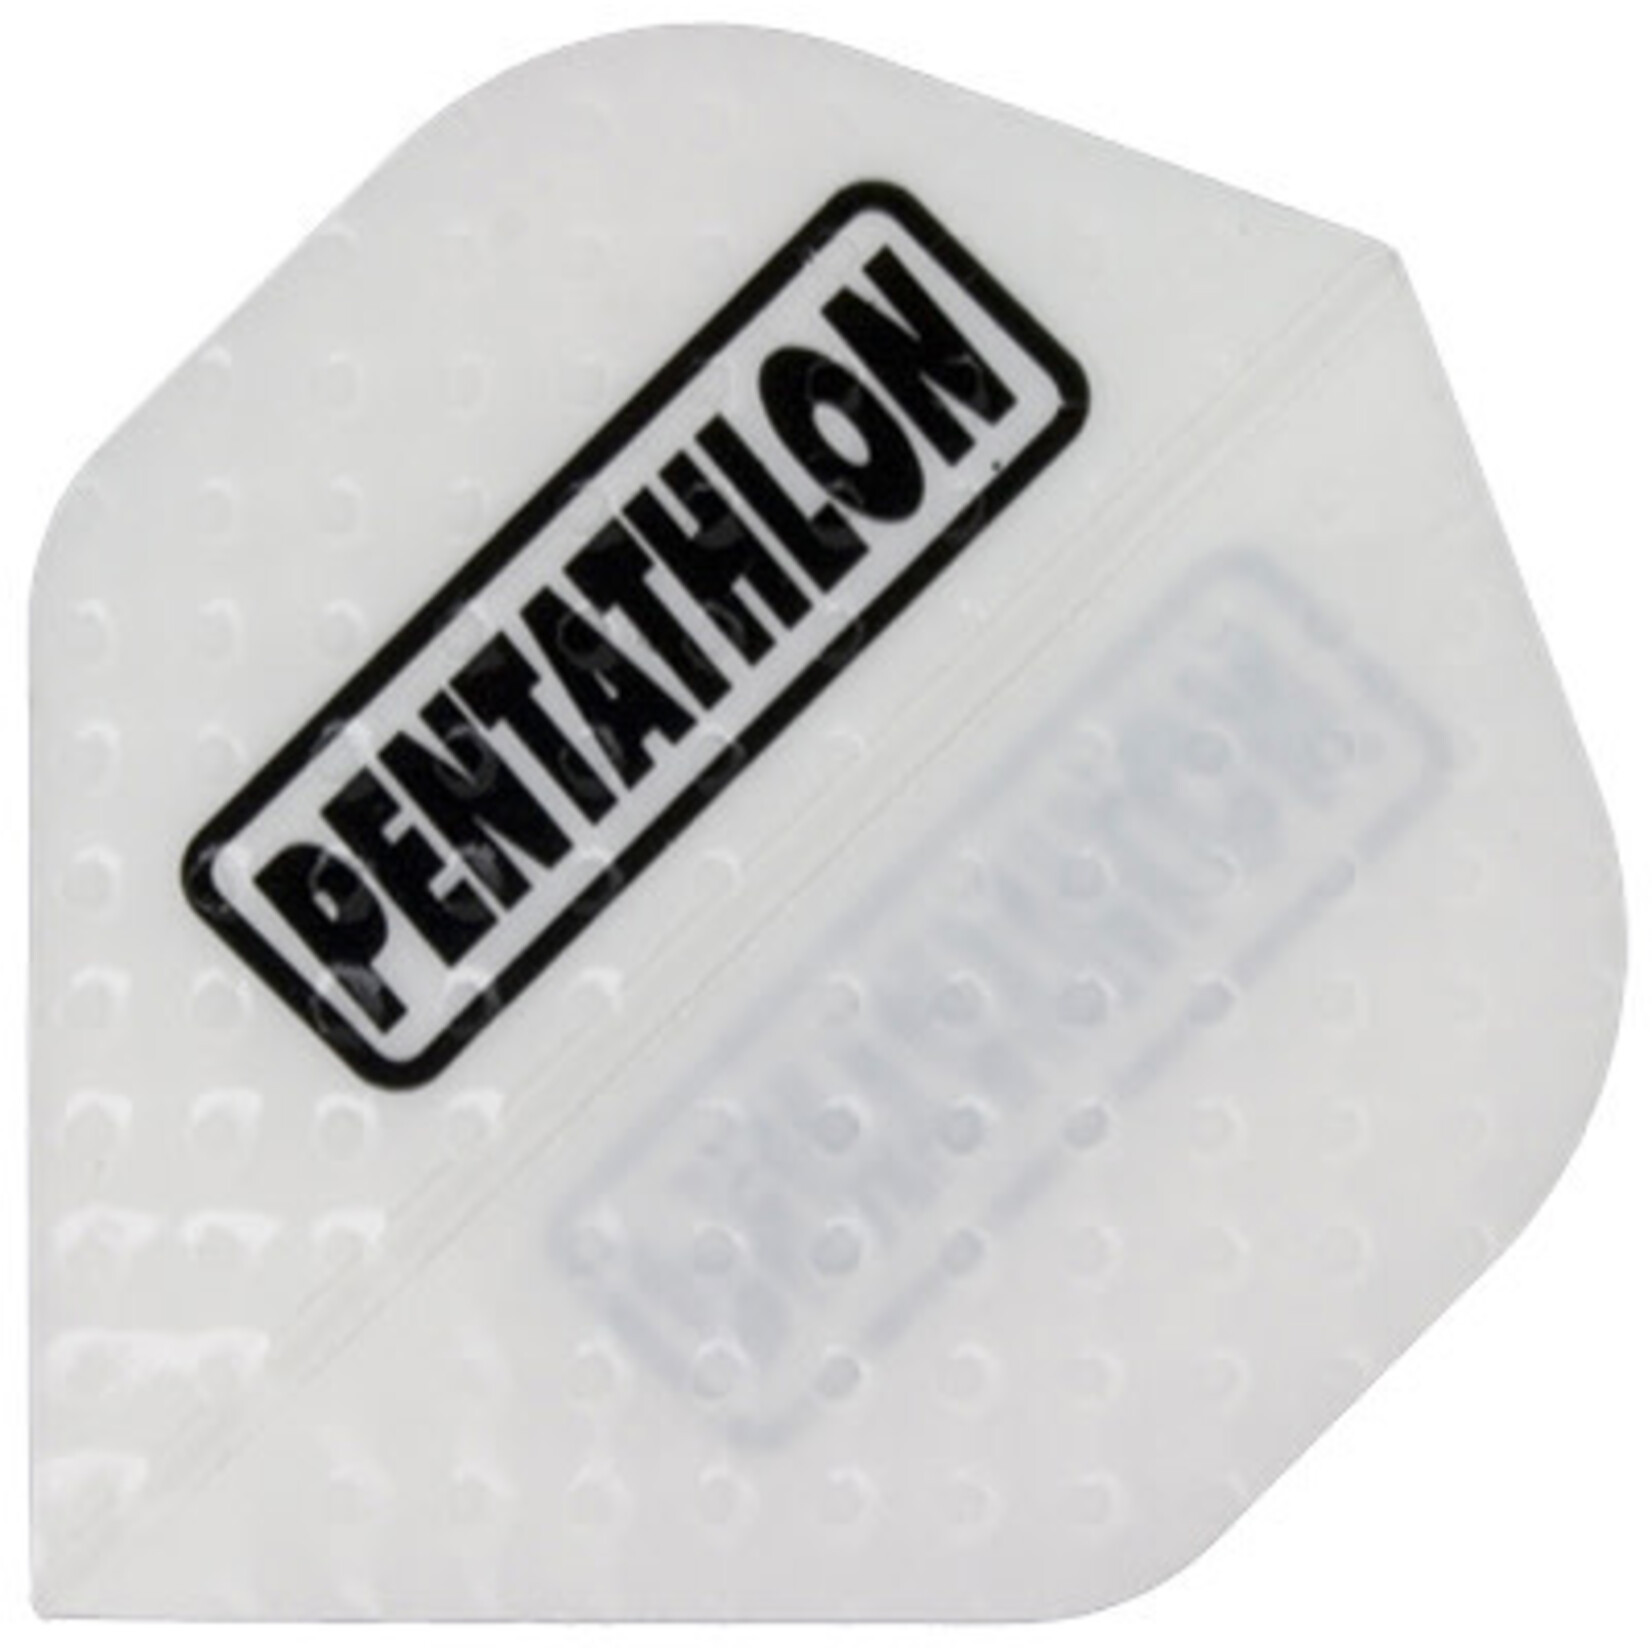 PENTATHLON Pentathlon White Dimplex Solid Standard Dart Flight